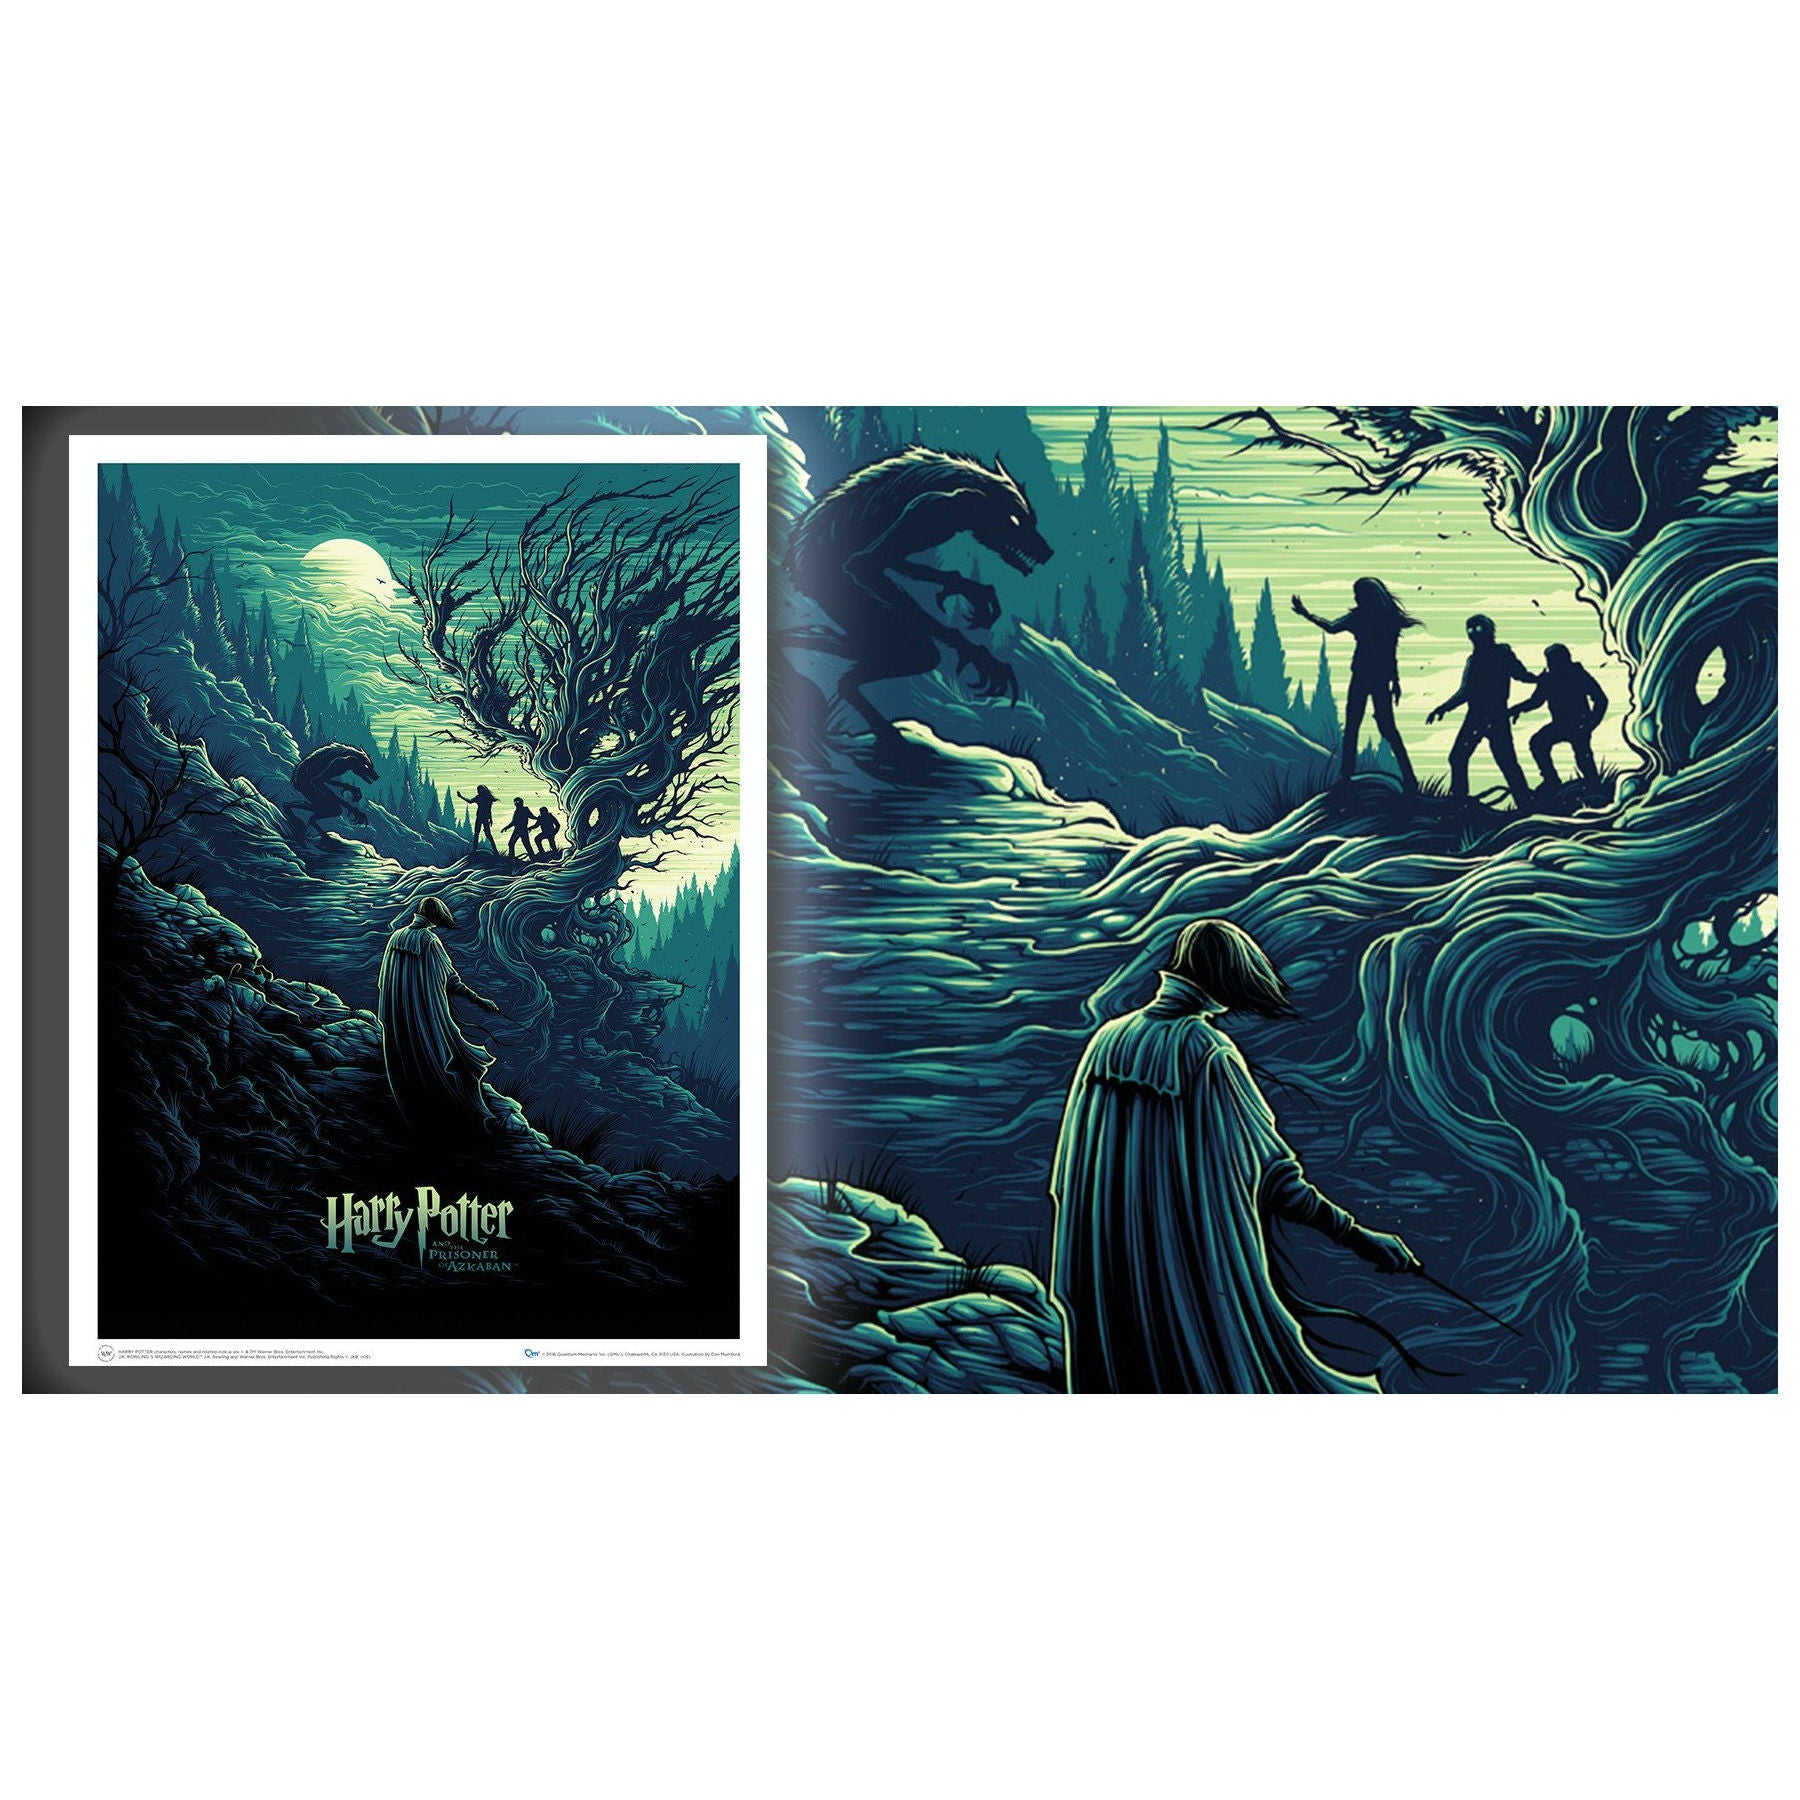 QMx Harry Potter& The Shadow of the WerewolfArt PrintArt By: Dan MumfordSize: 18"x24"